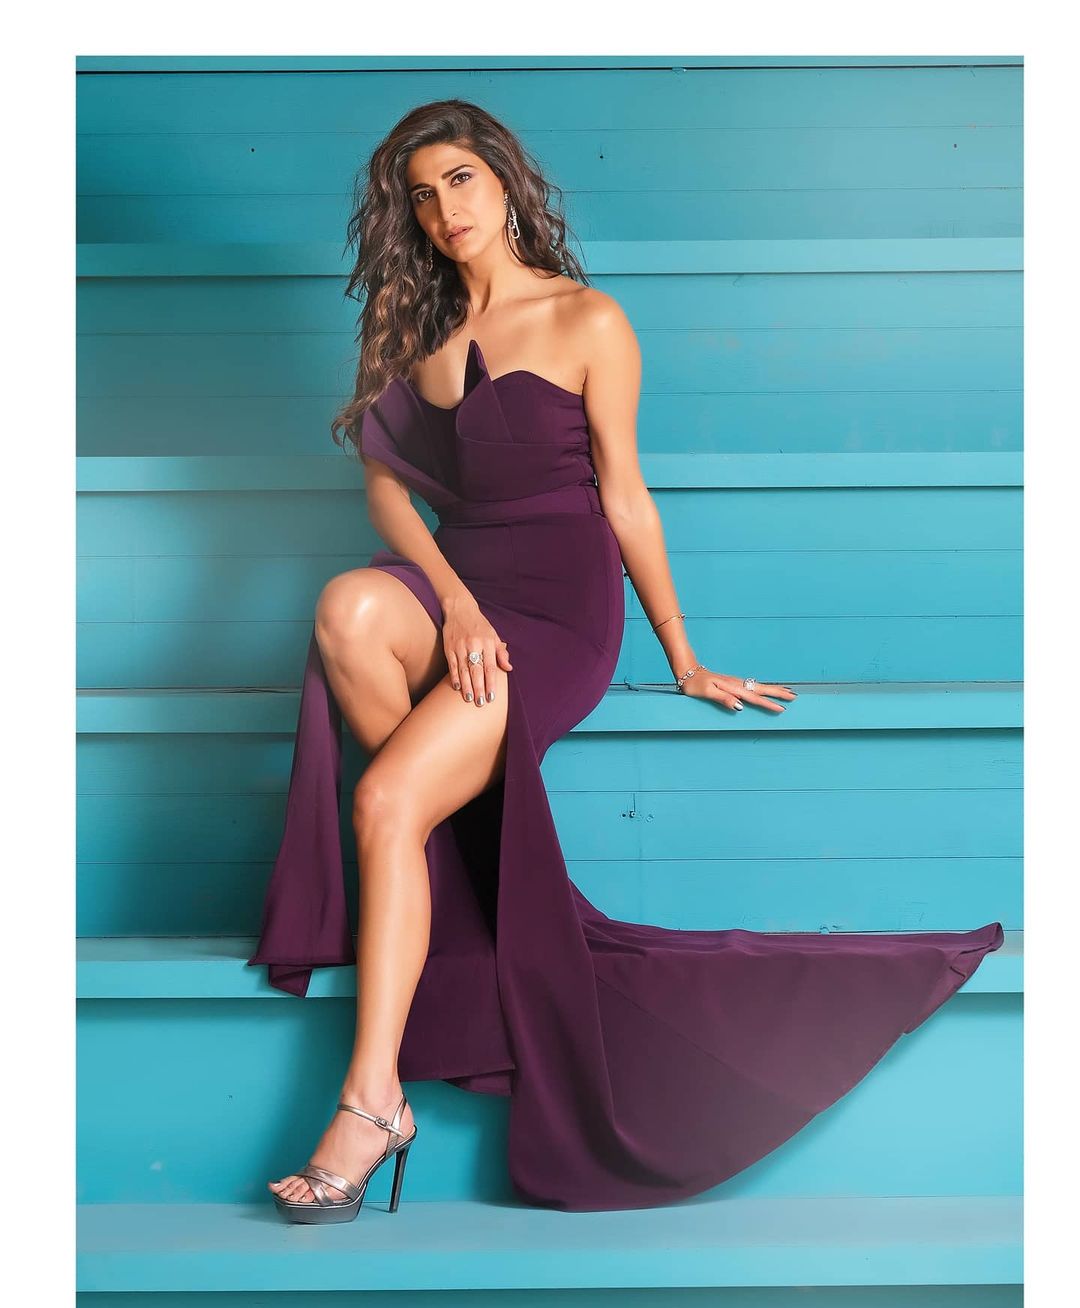  Aahana Kumra looks glamorous in the purple gown. (Image: Instagram)